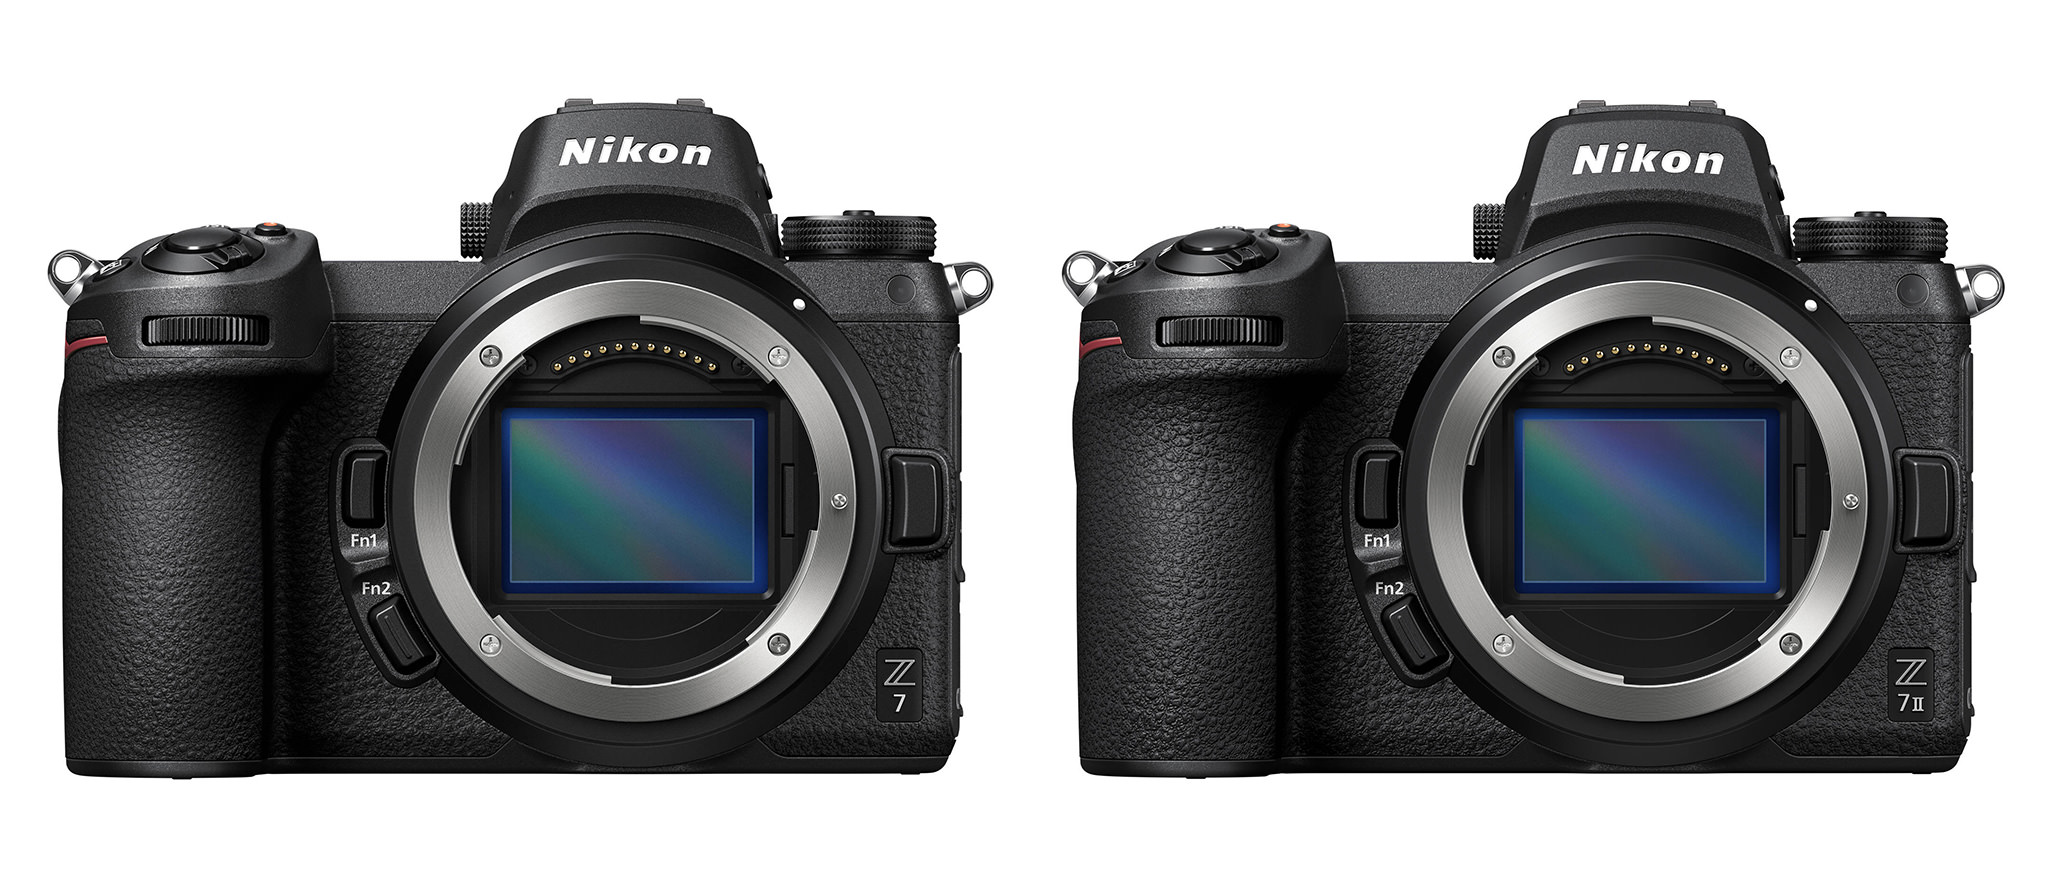 Mark down Dancer Dripping Nikon Z7 vs Z7 II: Which One Should You Buy?